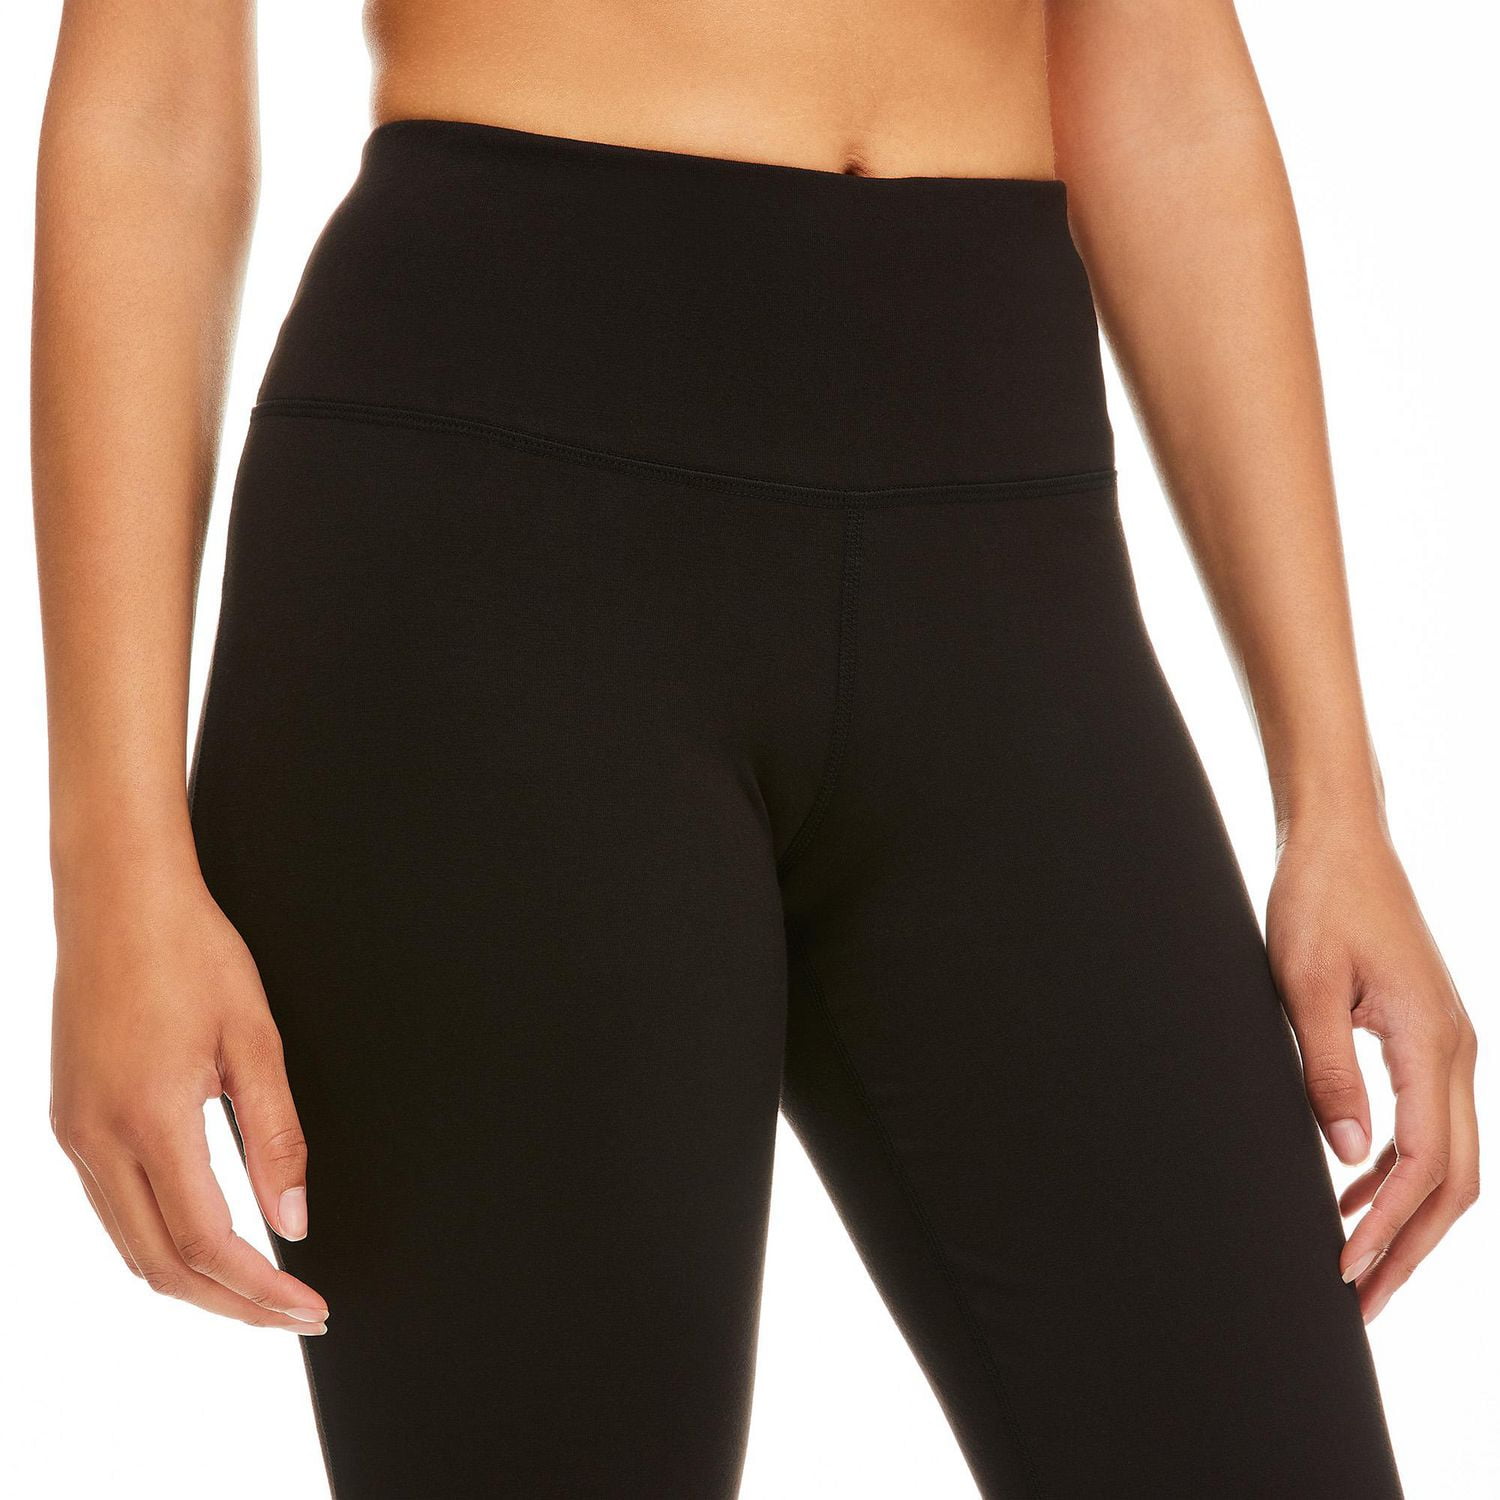 Buy Women's Yoga Pants & Tank Tops Online At Proyog